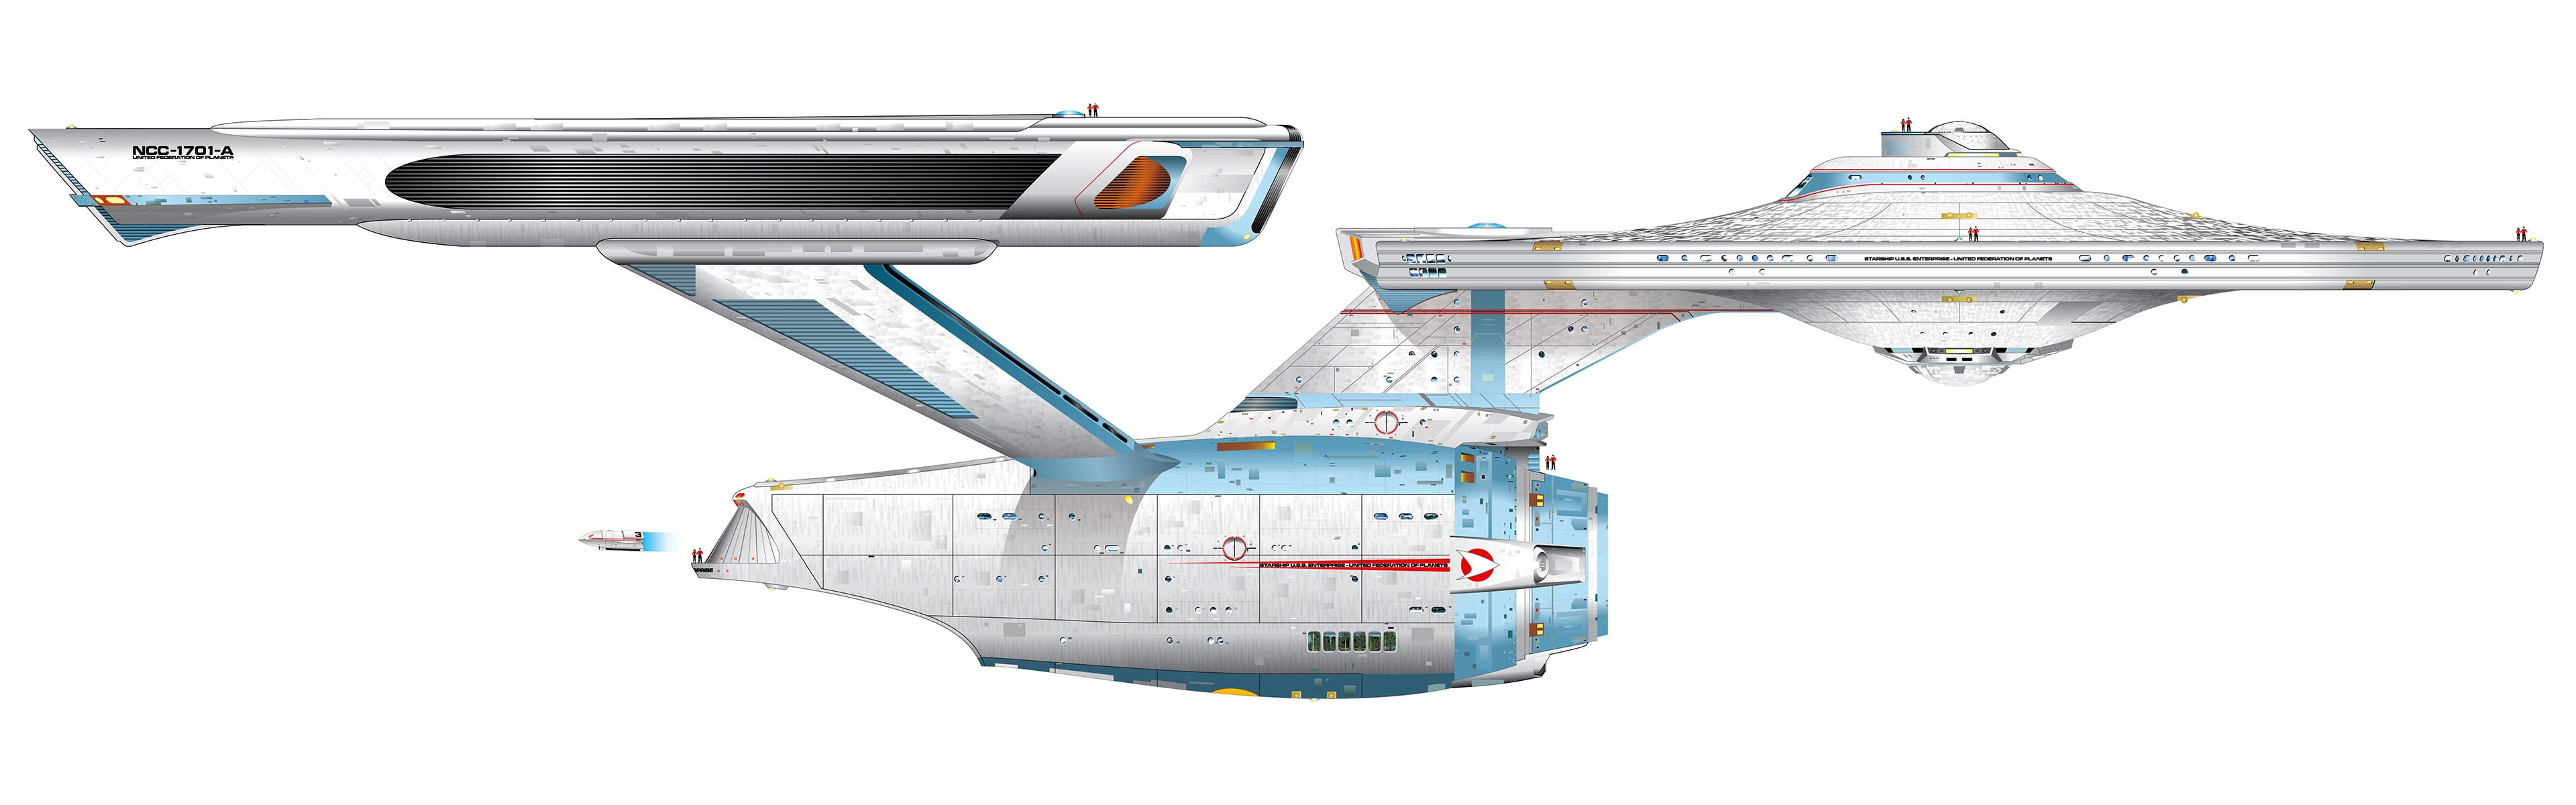 White And Blue Cruiser Ship Star Trek Uss Enterprise Spaceship Images, Photos, Reviews